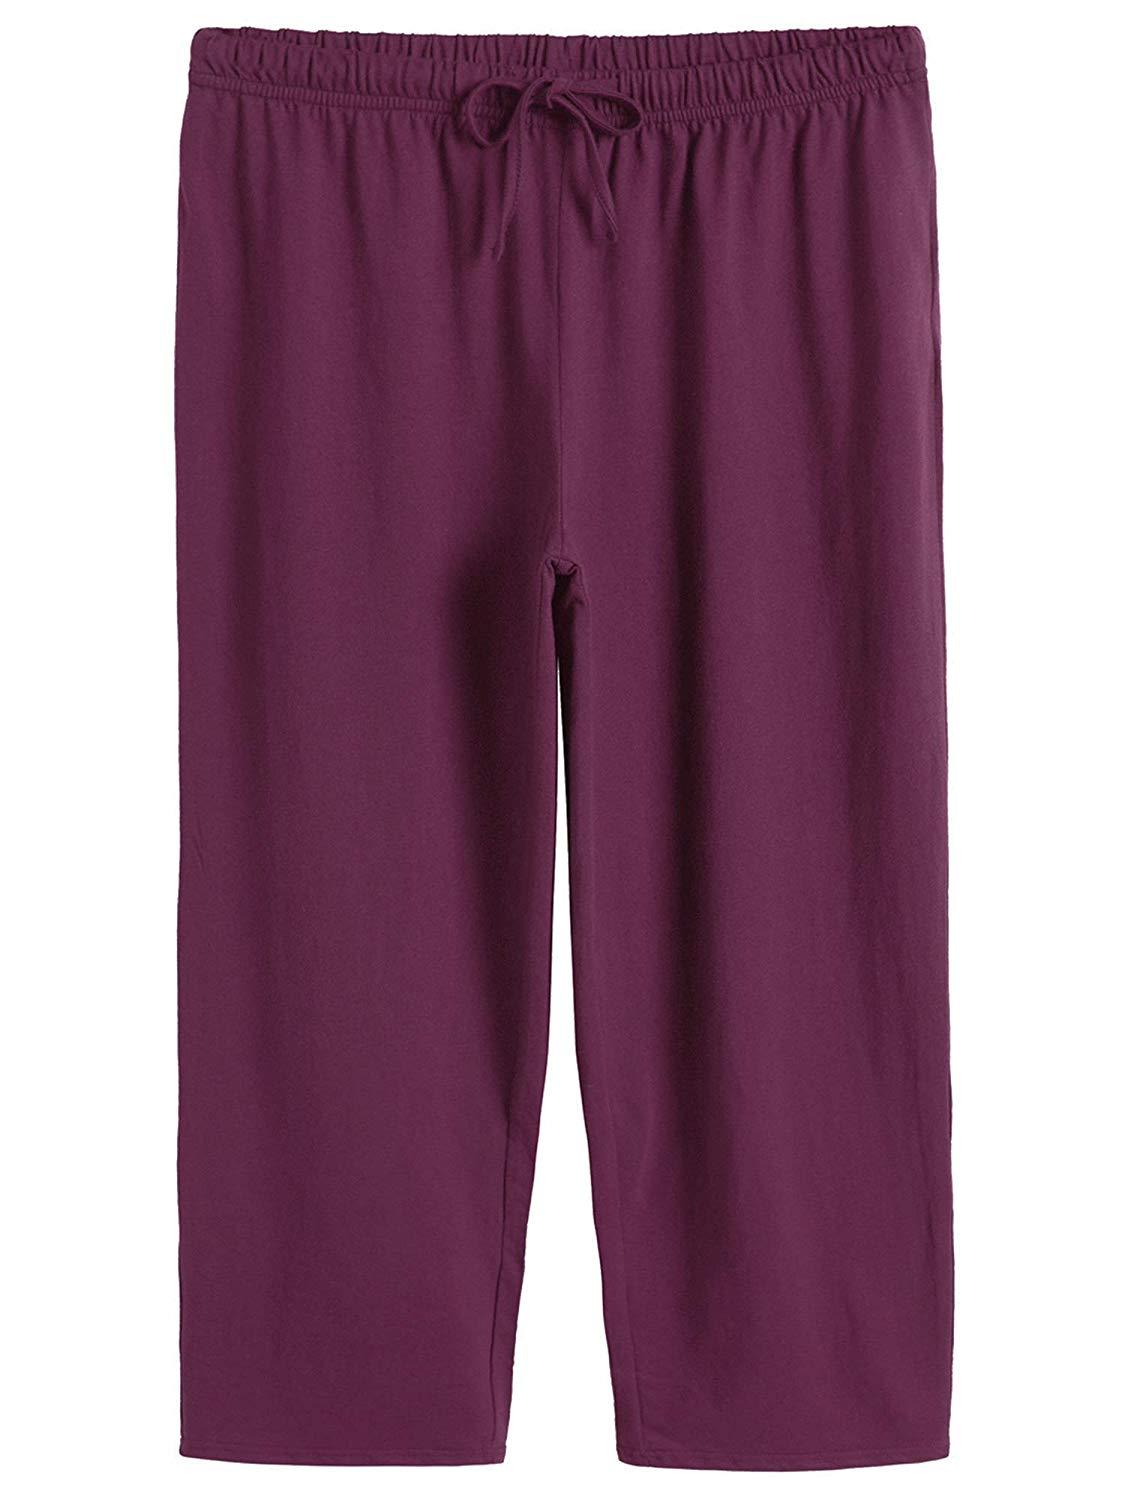 Women's Cotton Capri Pants Sleep Capris - Latuza